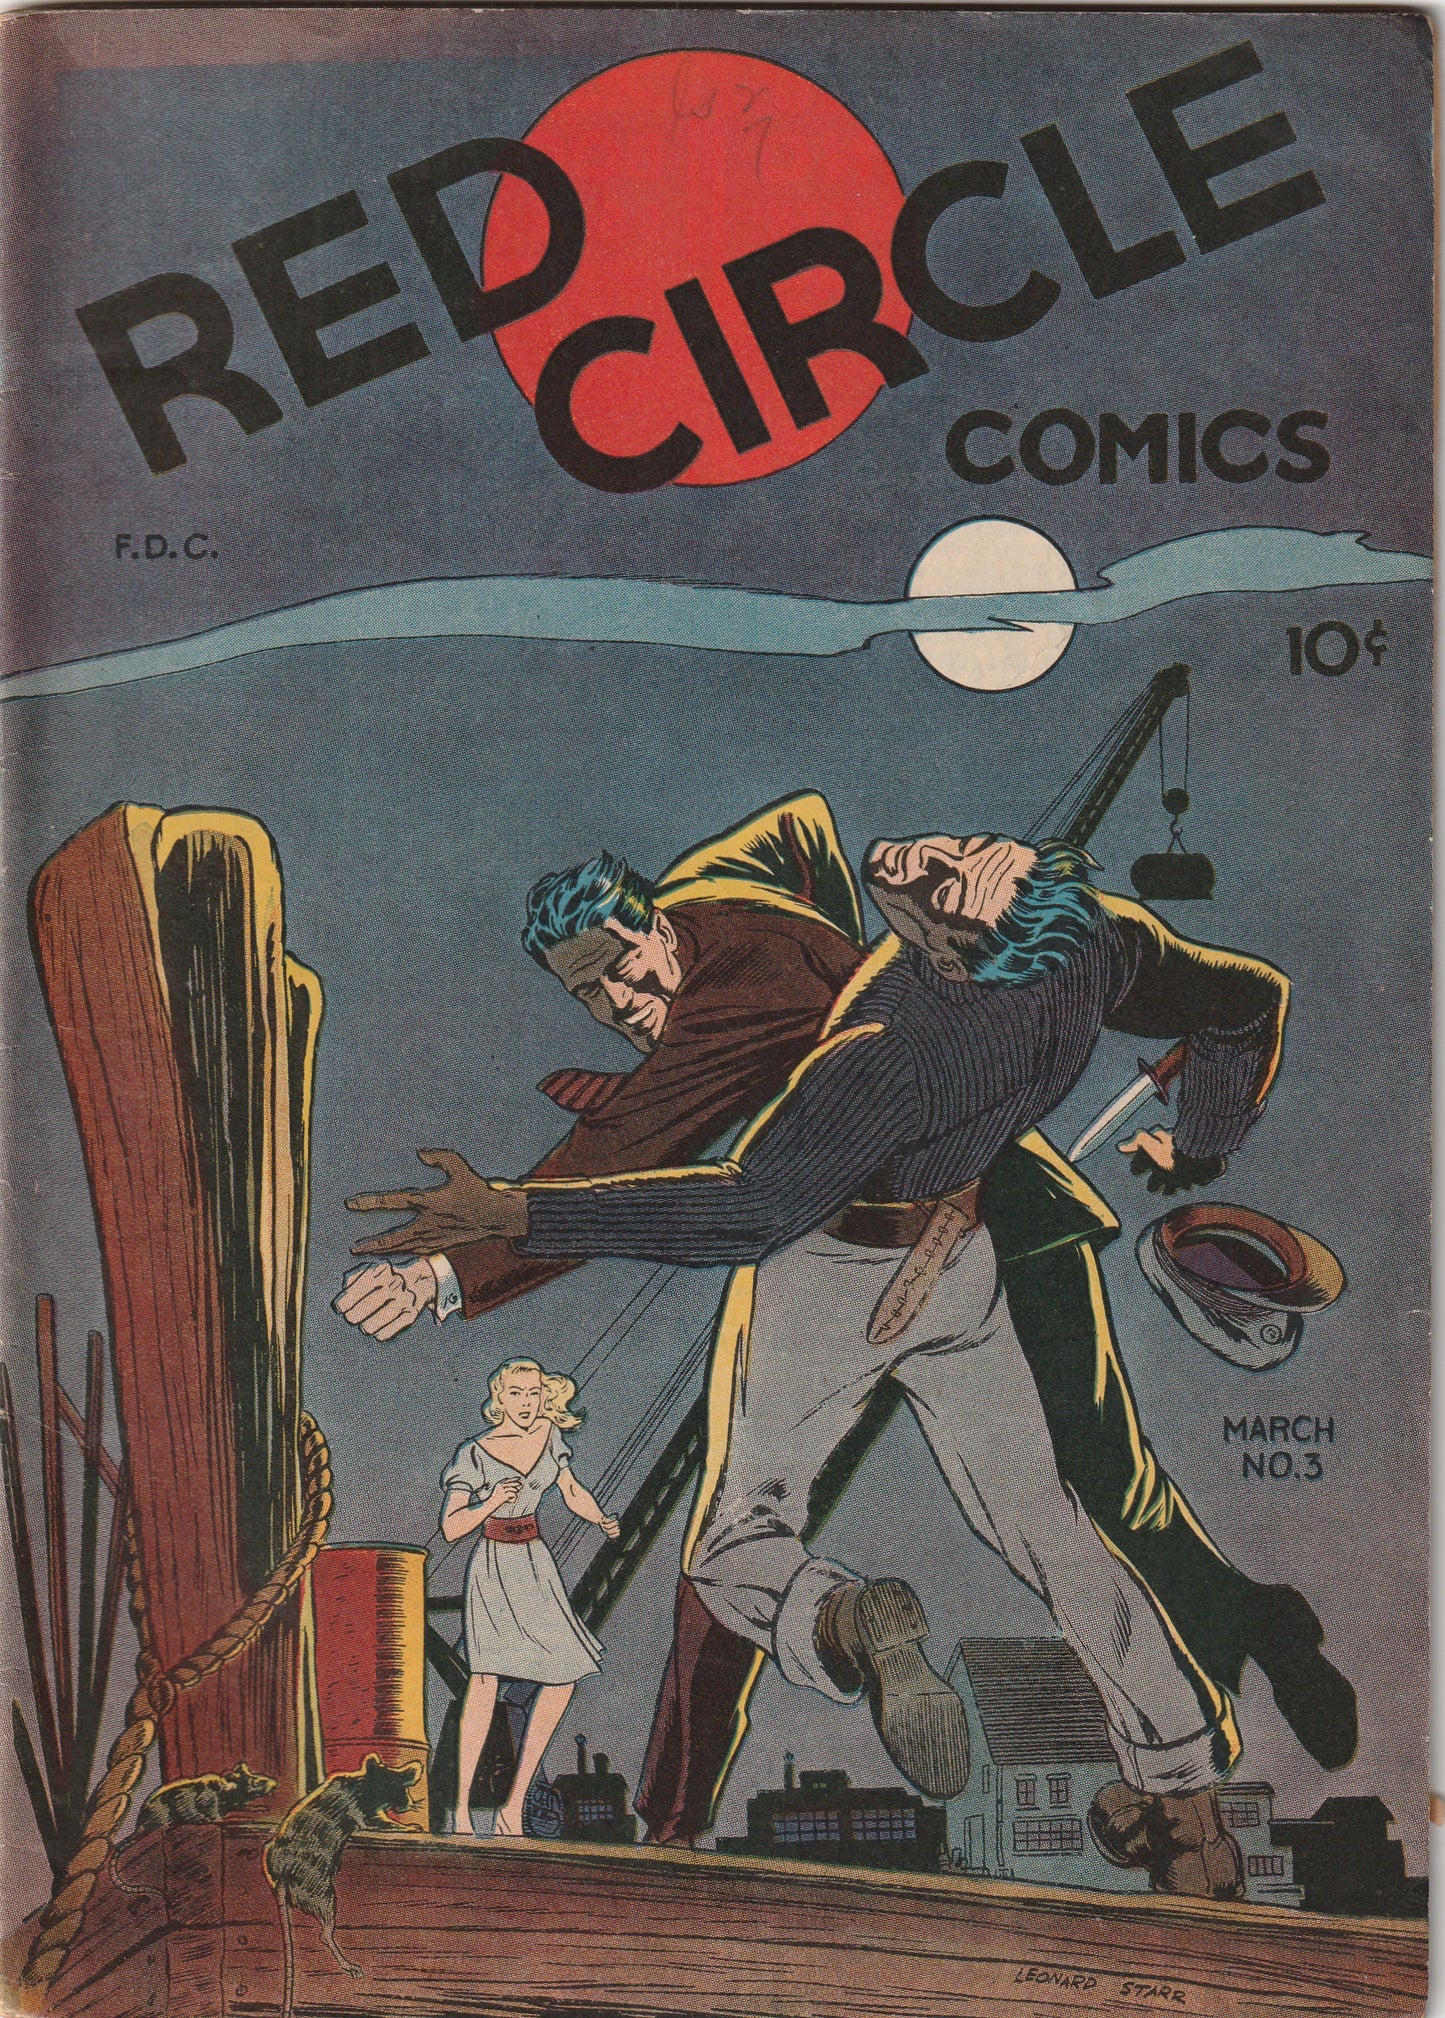 Red Circle Comics #3 (1945)